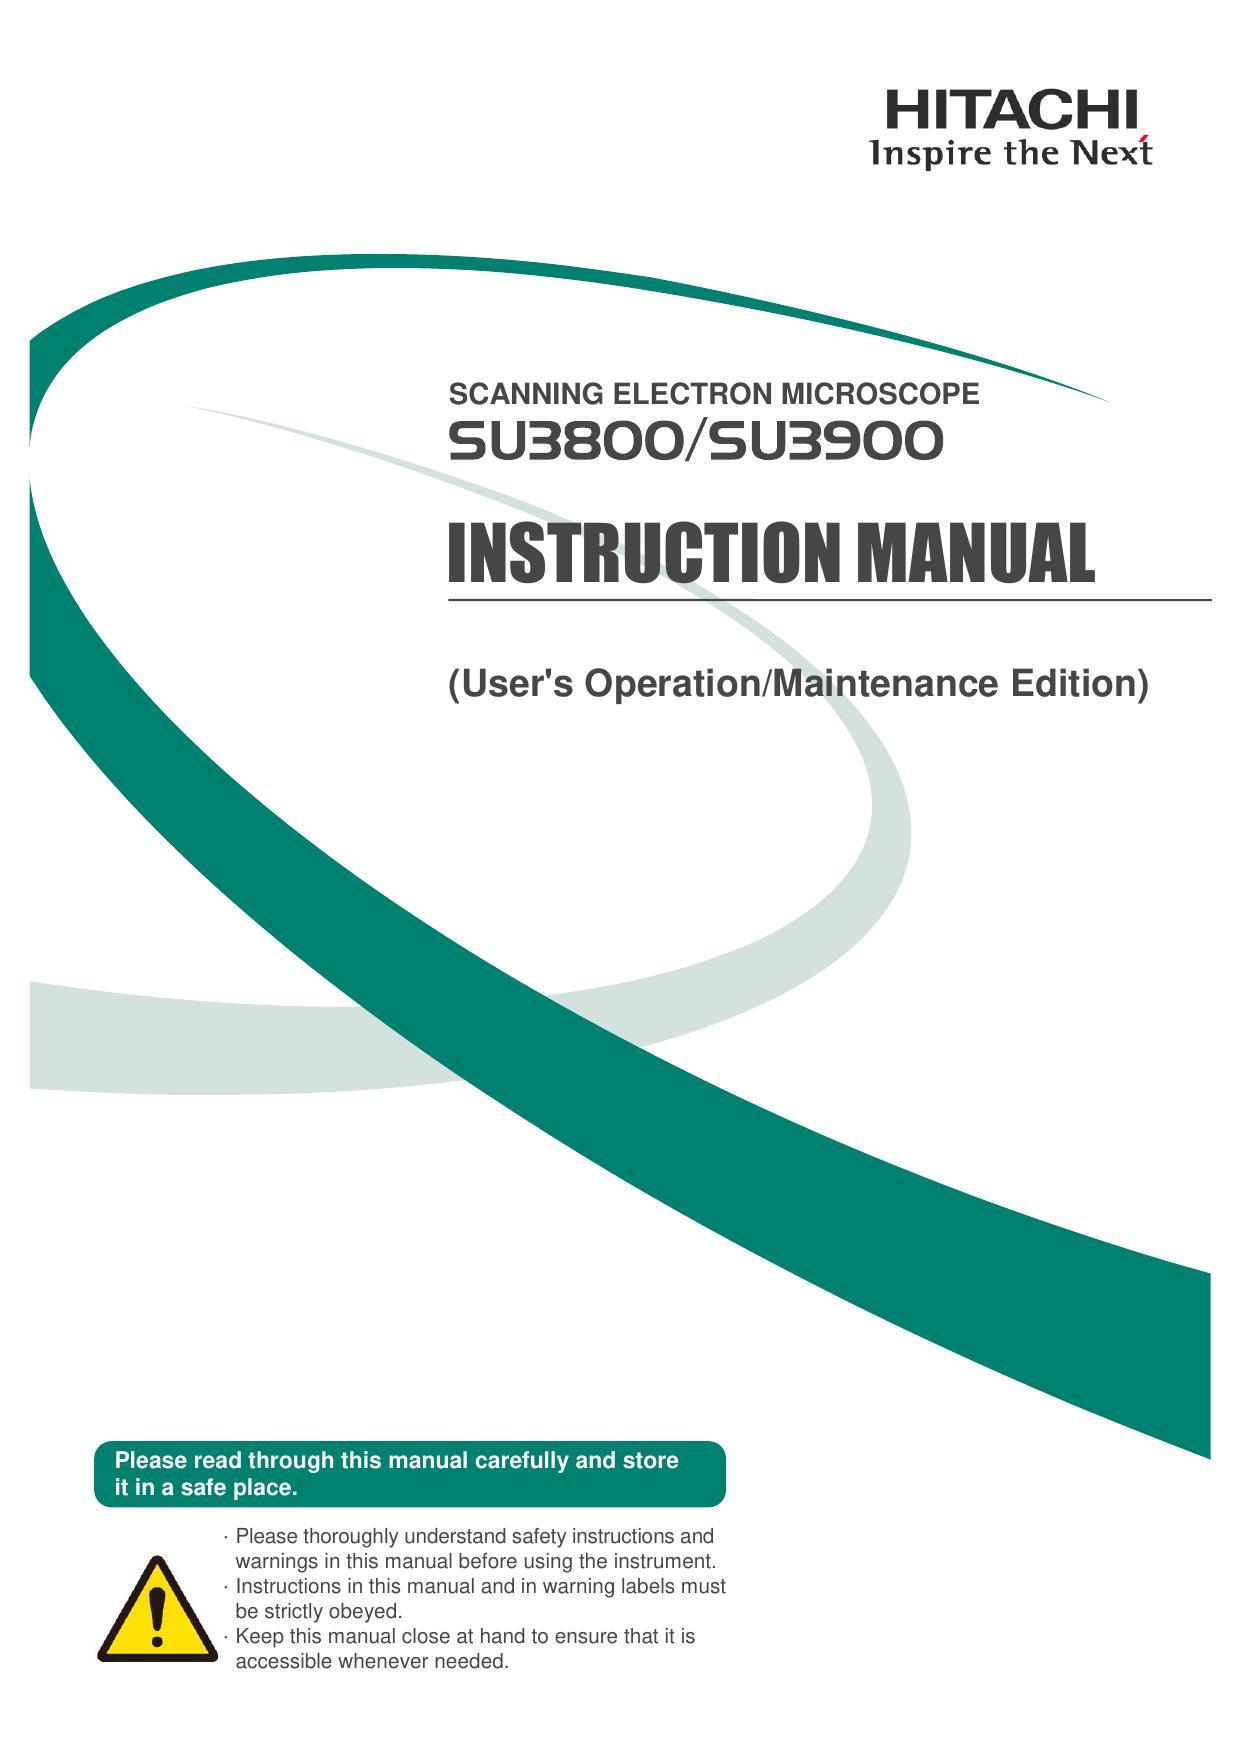 hitachi-inspire-the-next-scanning-electron-microscope-su3800su3900-instruction-manual-users-operationmaintenance-edition.pdf